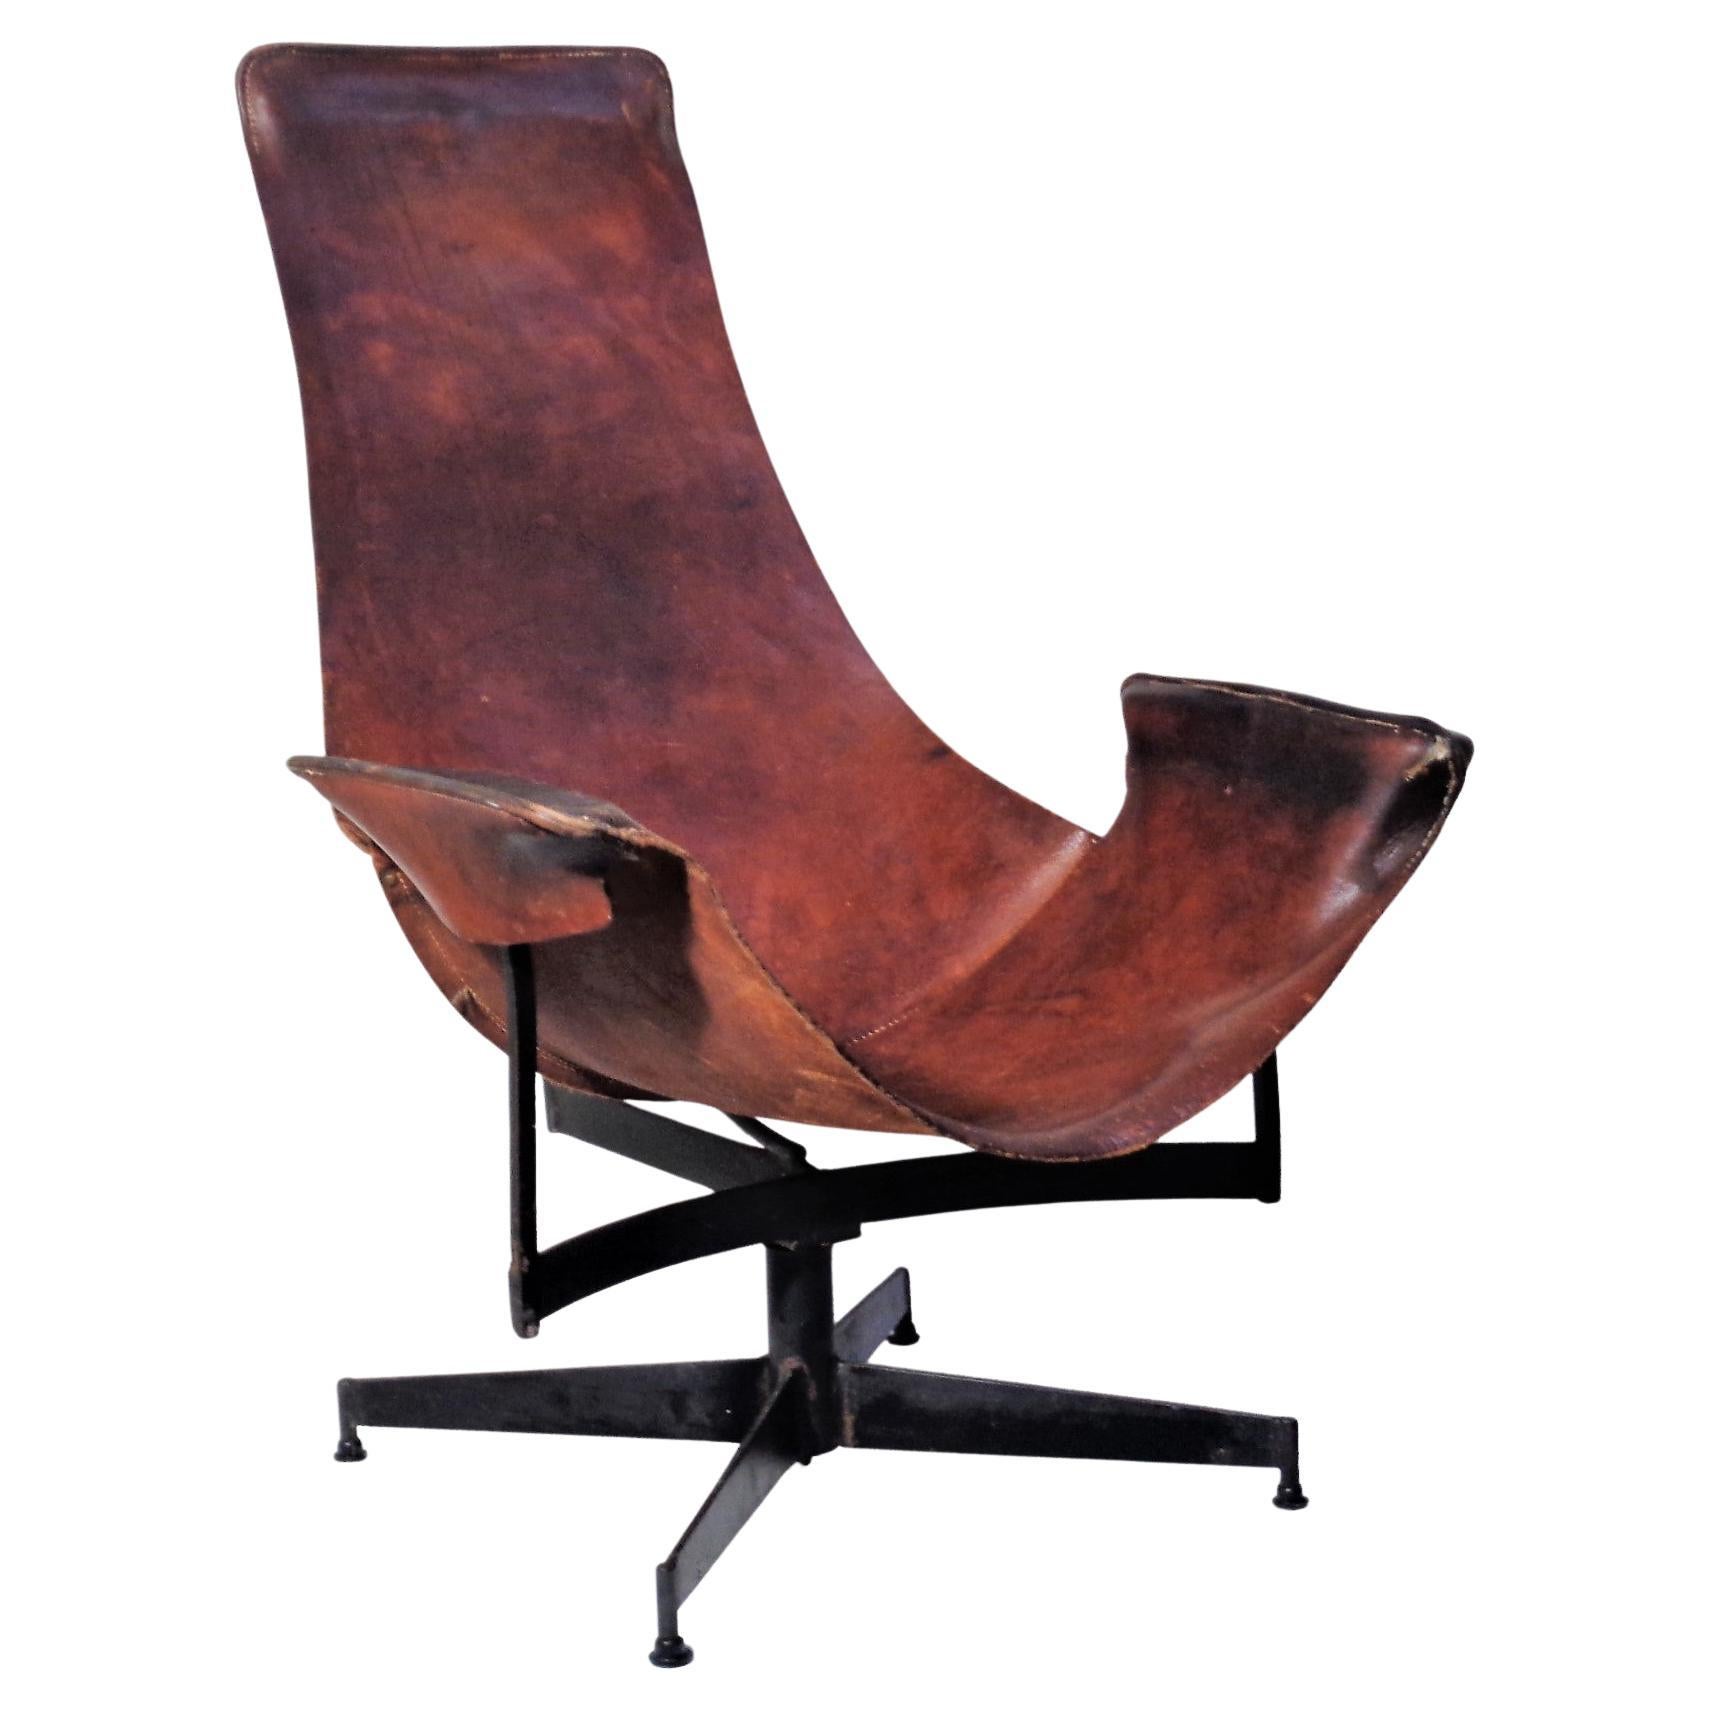  William Katavolos Swivel "K Chair" for Leathercrafter, Circa 1950's